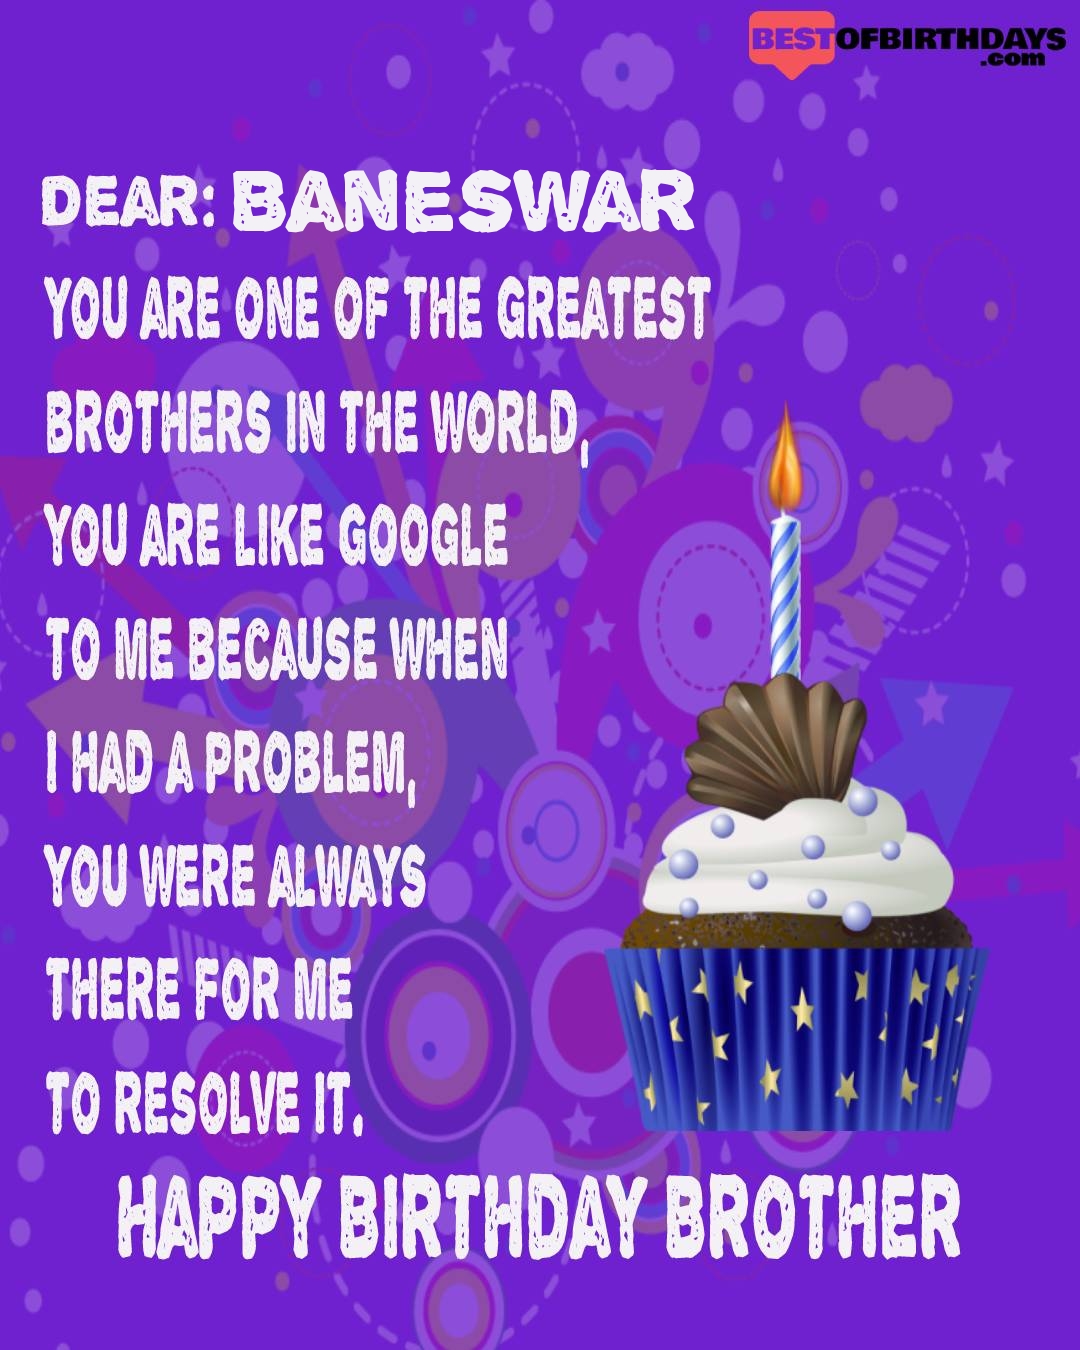 Happy birthday baneswar bhai brother bro